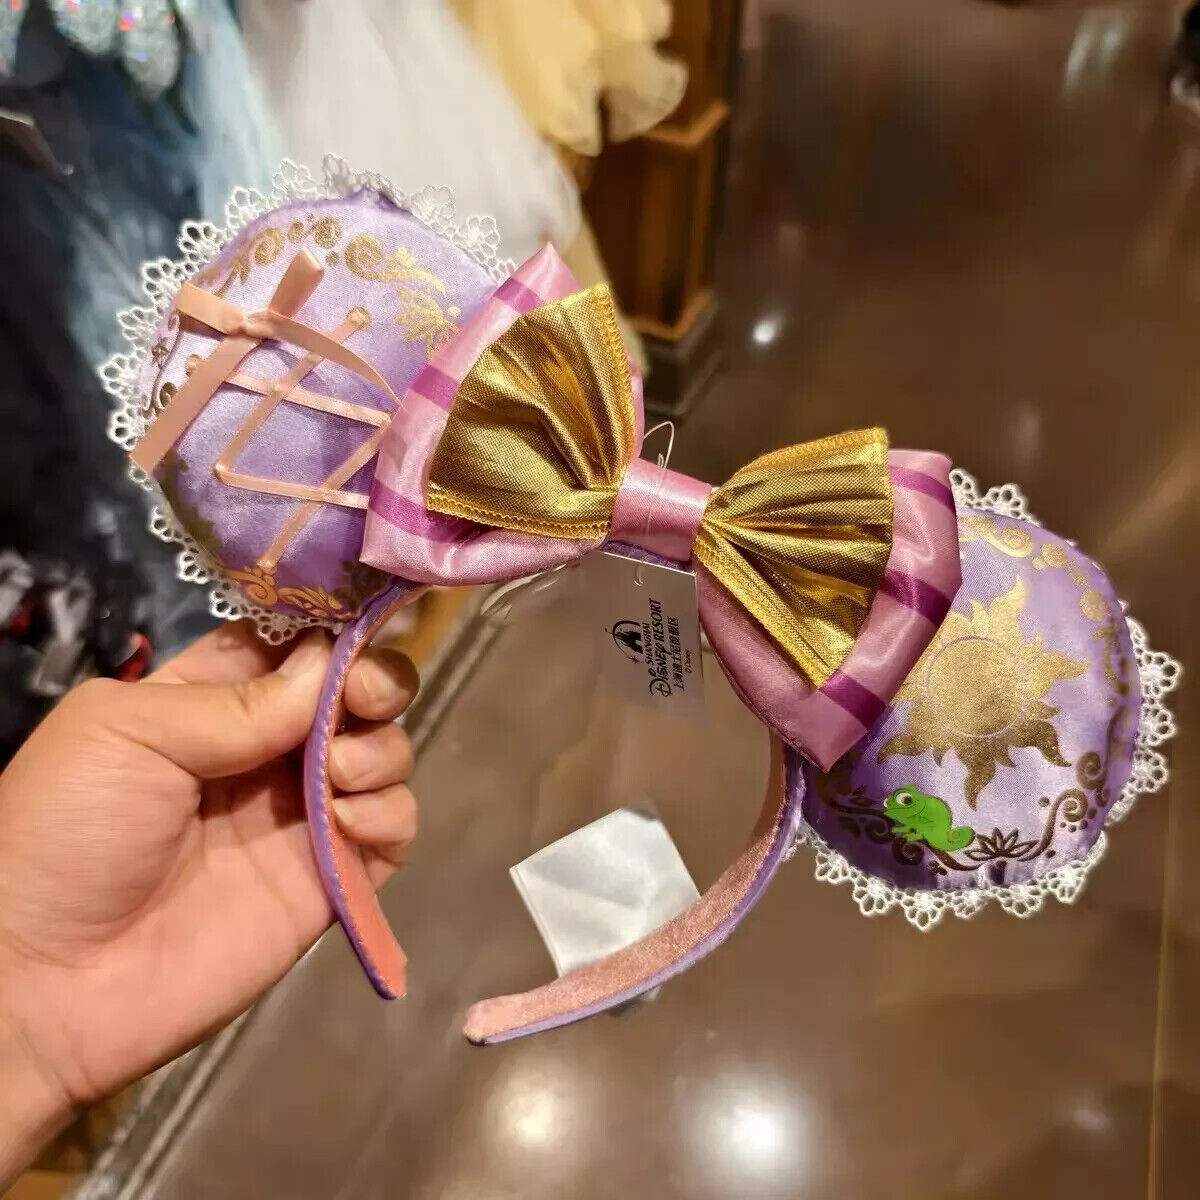 Authentic Shanghai Disneyland Disney Princess Rapunzel Minnie Mouse ear headband